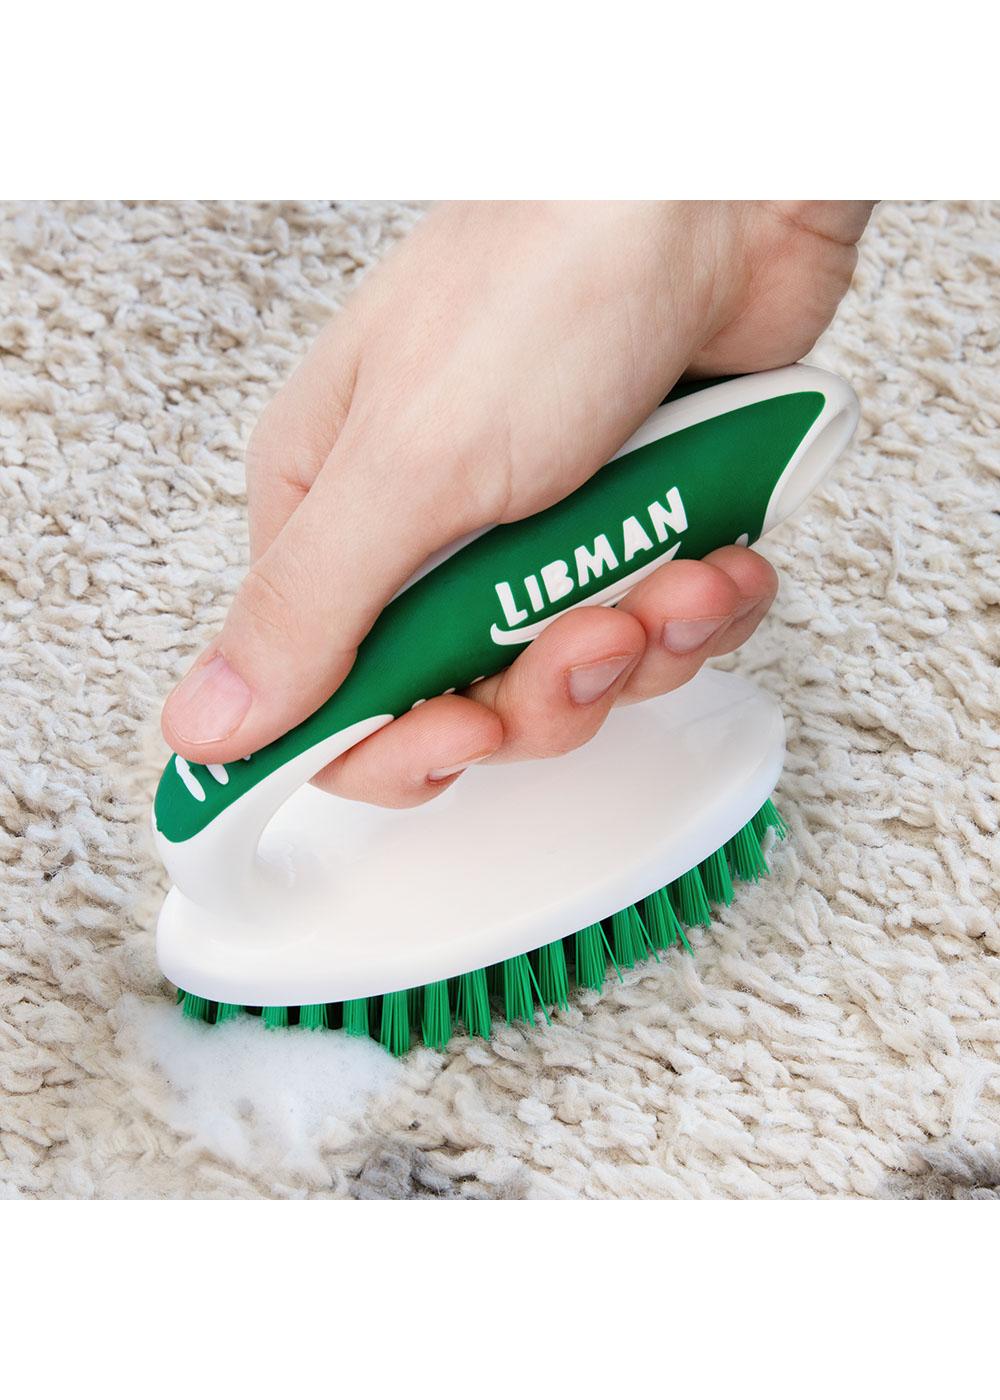 Libman Small Scrub Brush; image 3 of 4